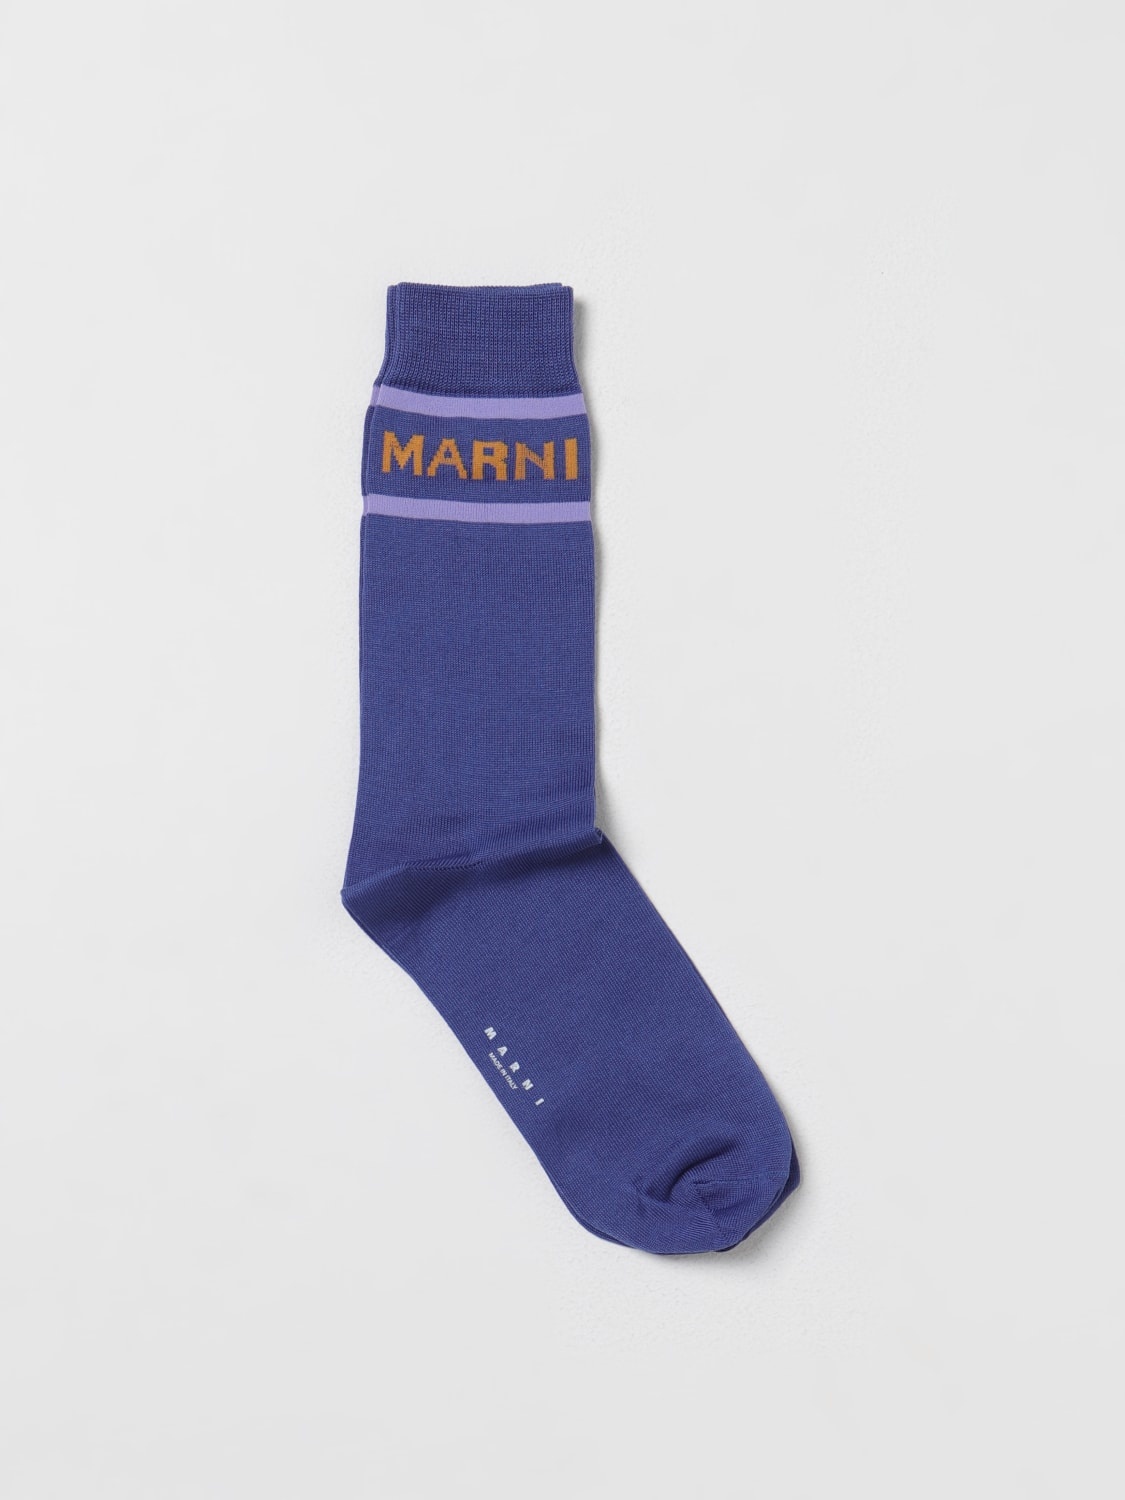 Marni socks for man - 1